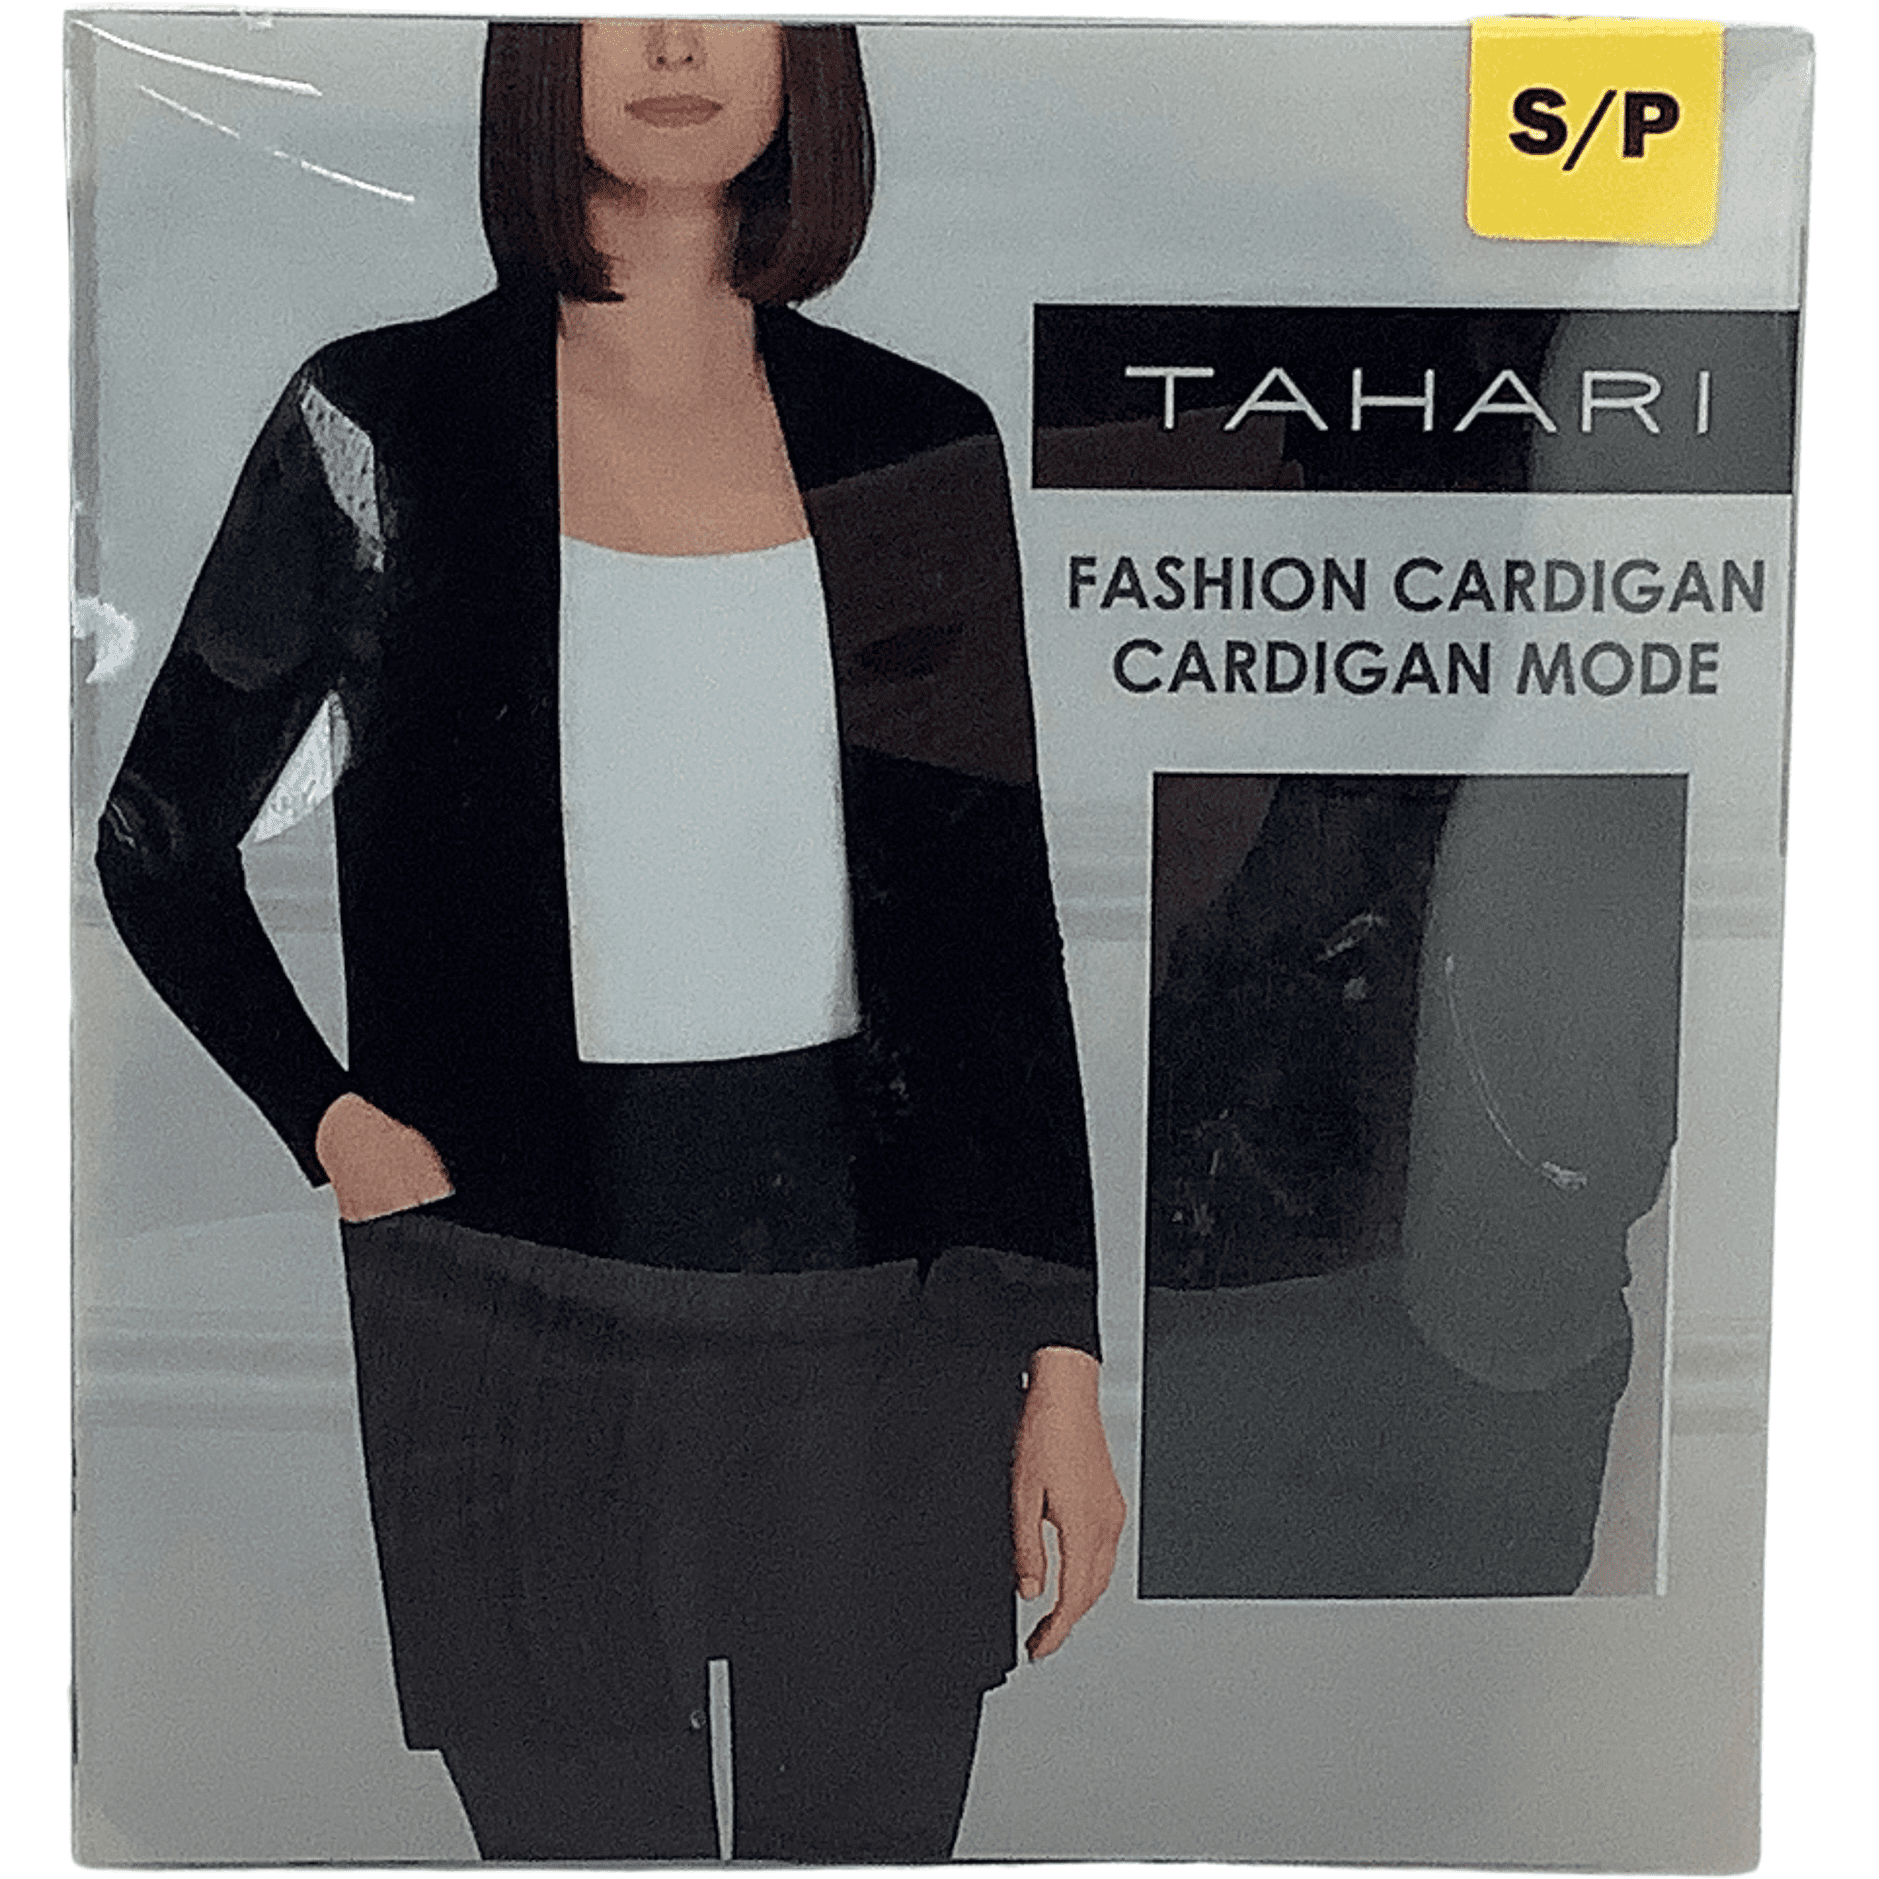 Tahari Women's Fashion Cardigan / Black / Size Small **OPENED**